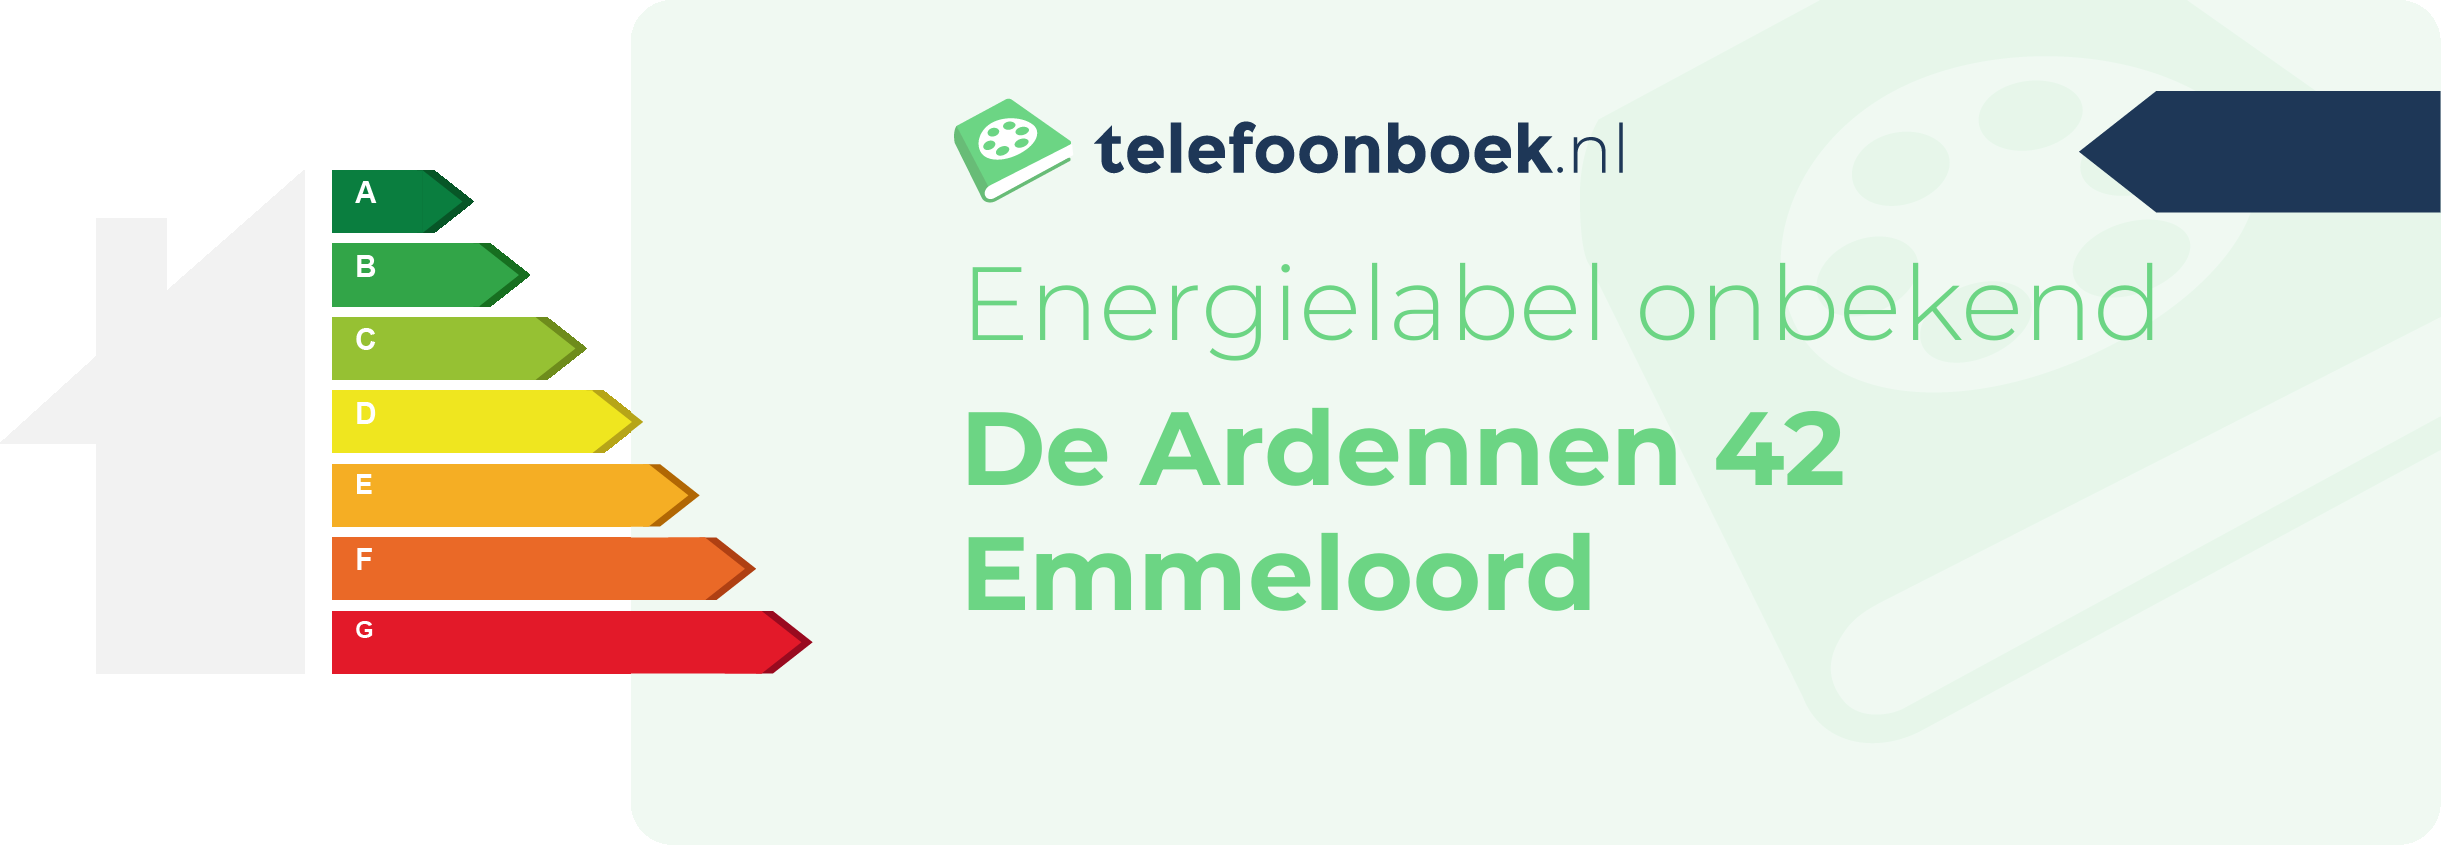 Energielabel De Ardennen 42 Emmeloord